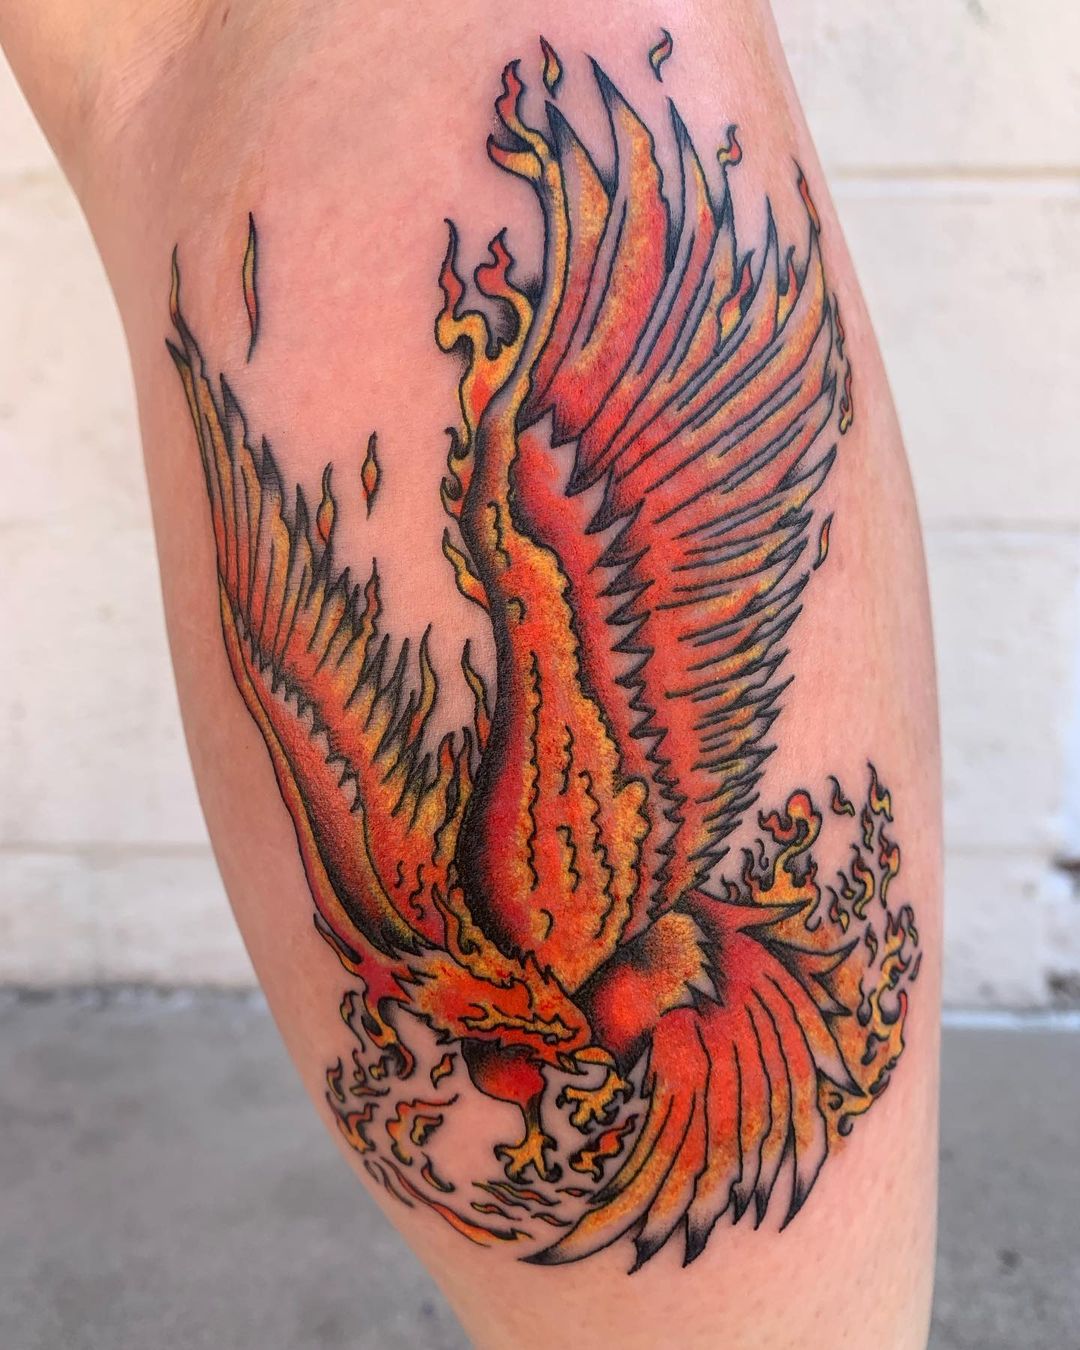 Phoenix tattoos - what do they mean? Phoenix Tattoos Designs & Symbols - Phoenix  tattoo meanings